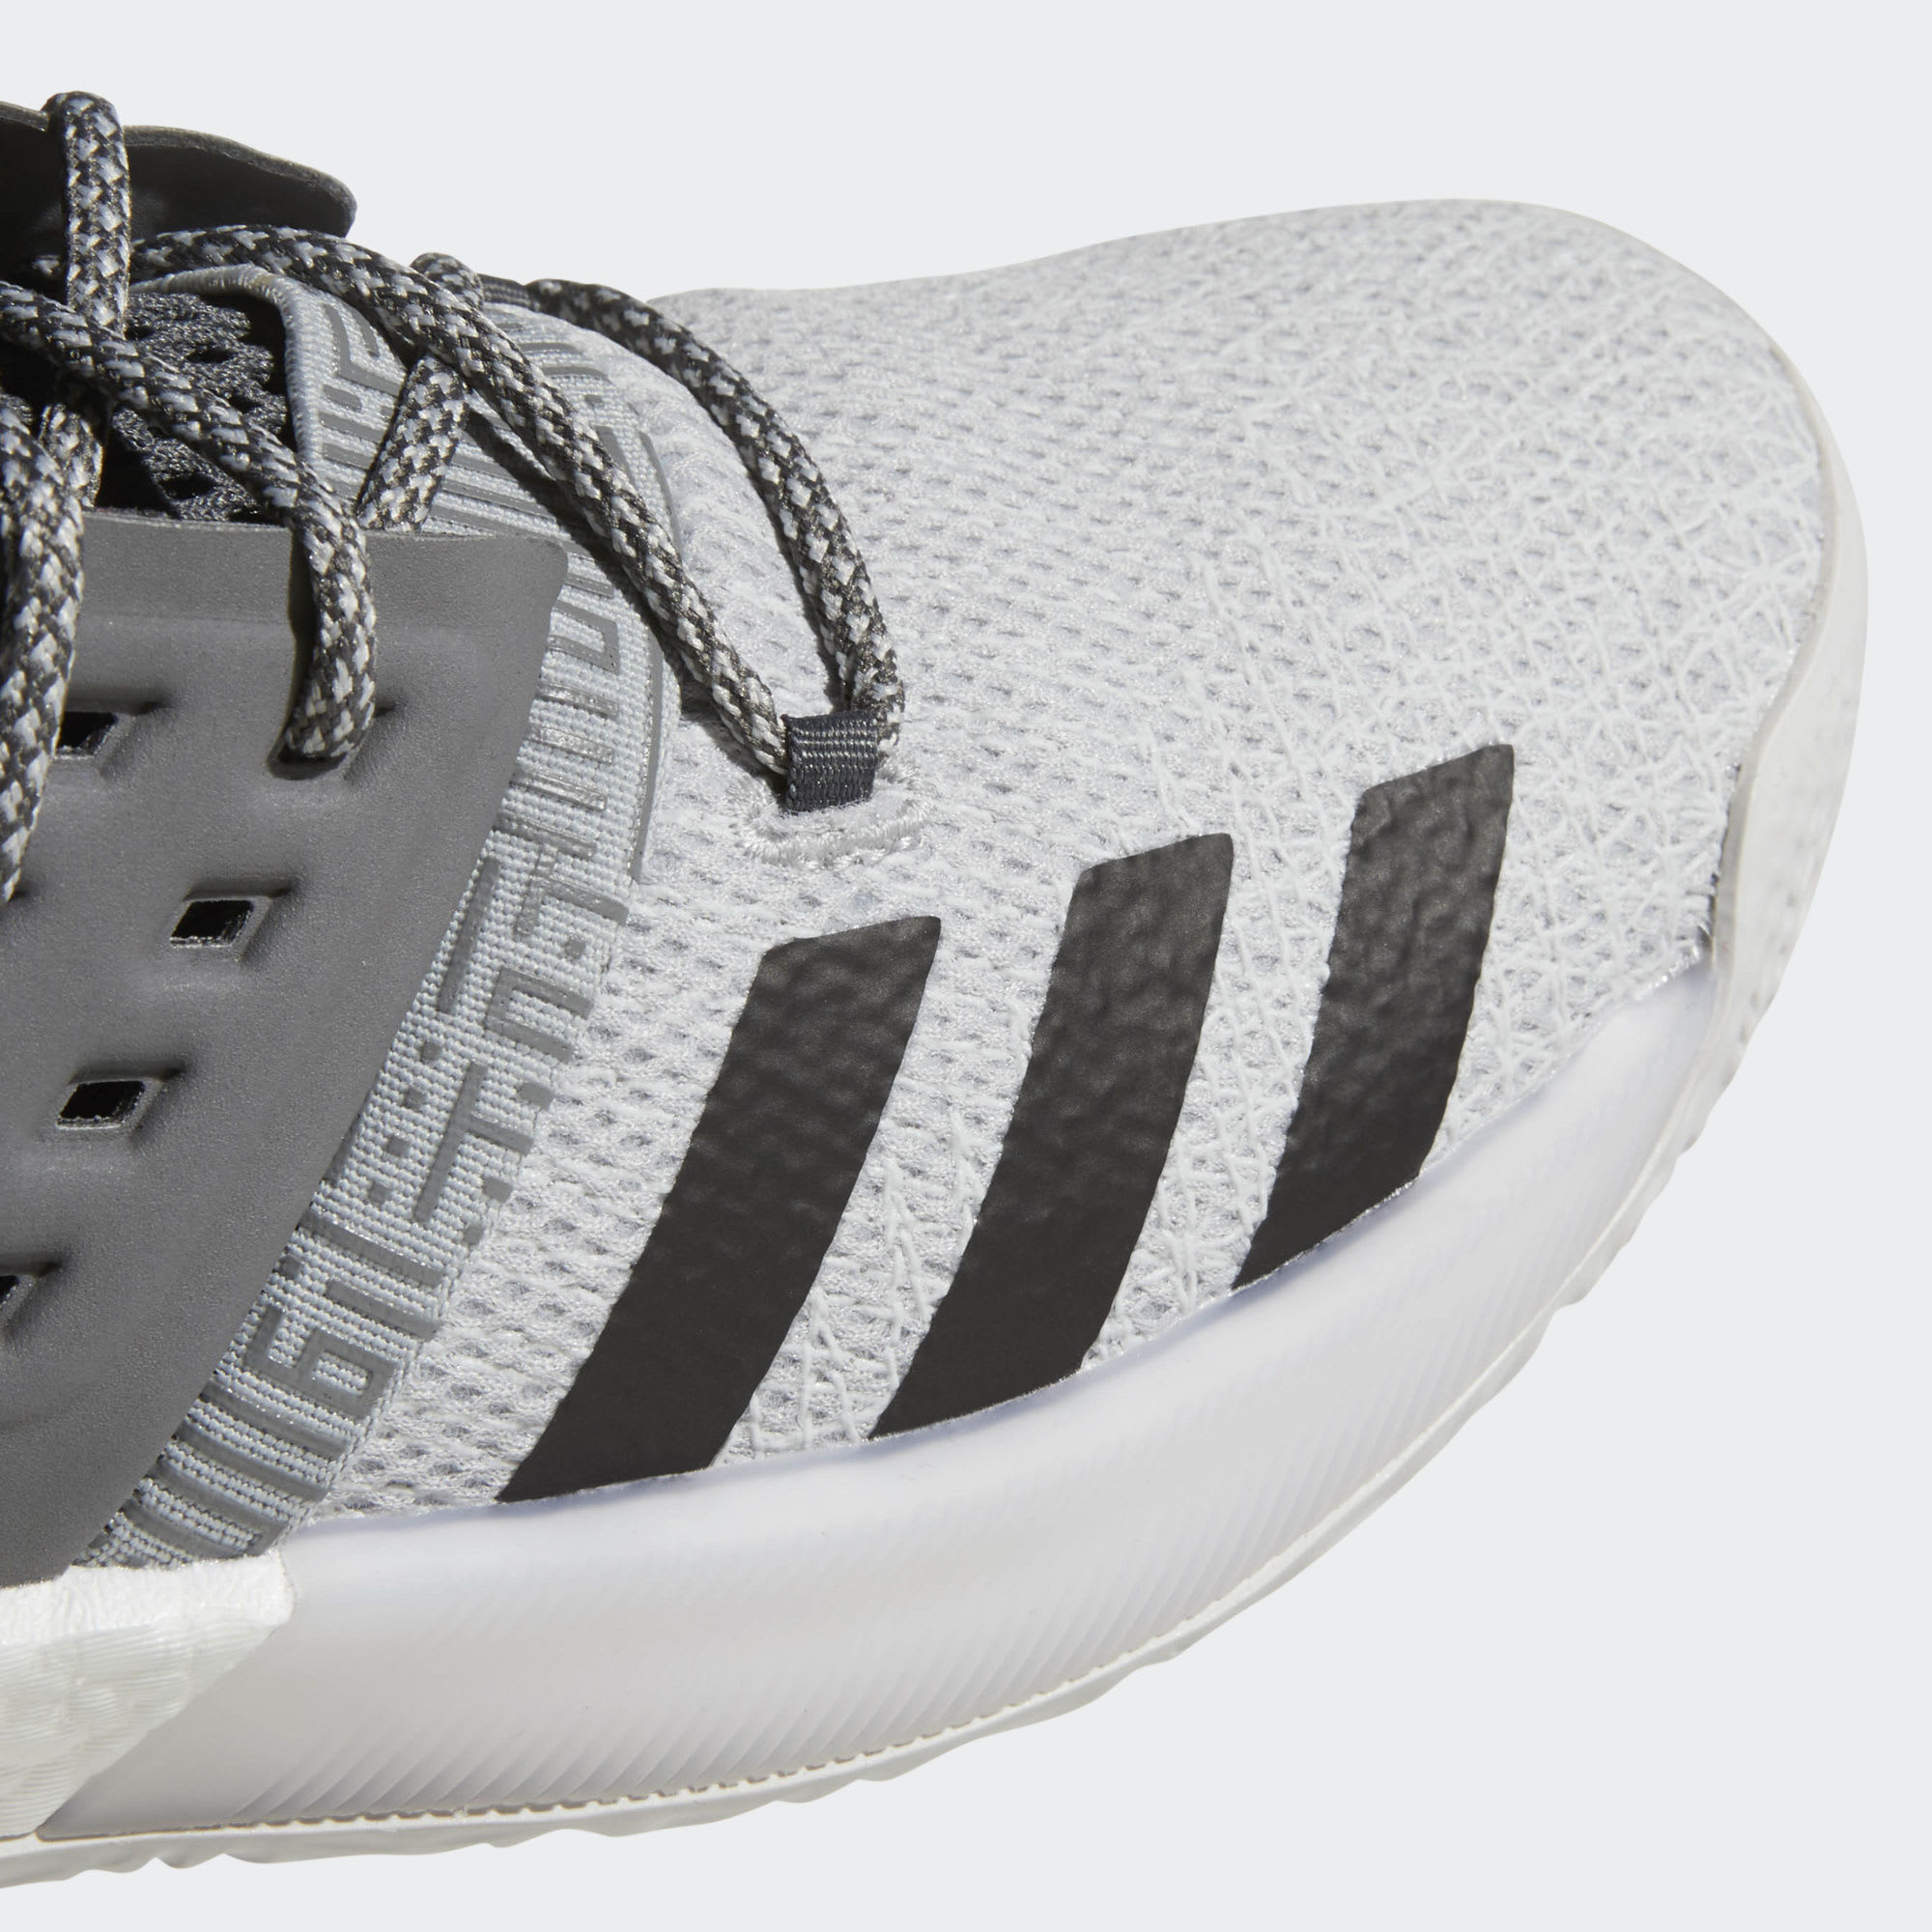 Adidas Harden Vol. 2 Concrete Grey Release Date AH2122 Toe